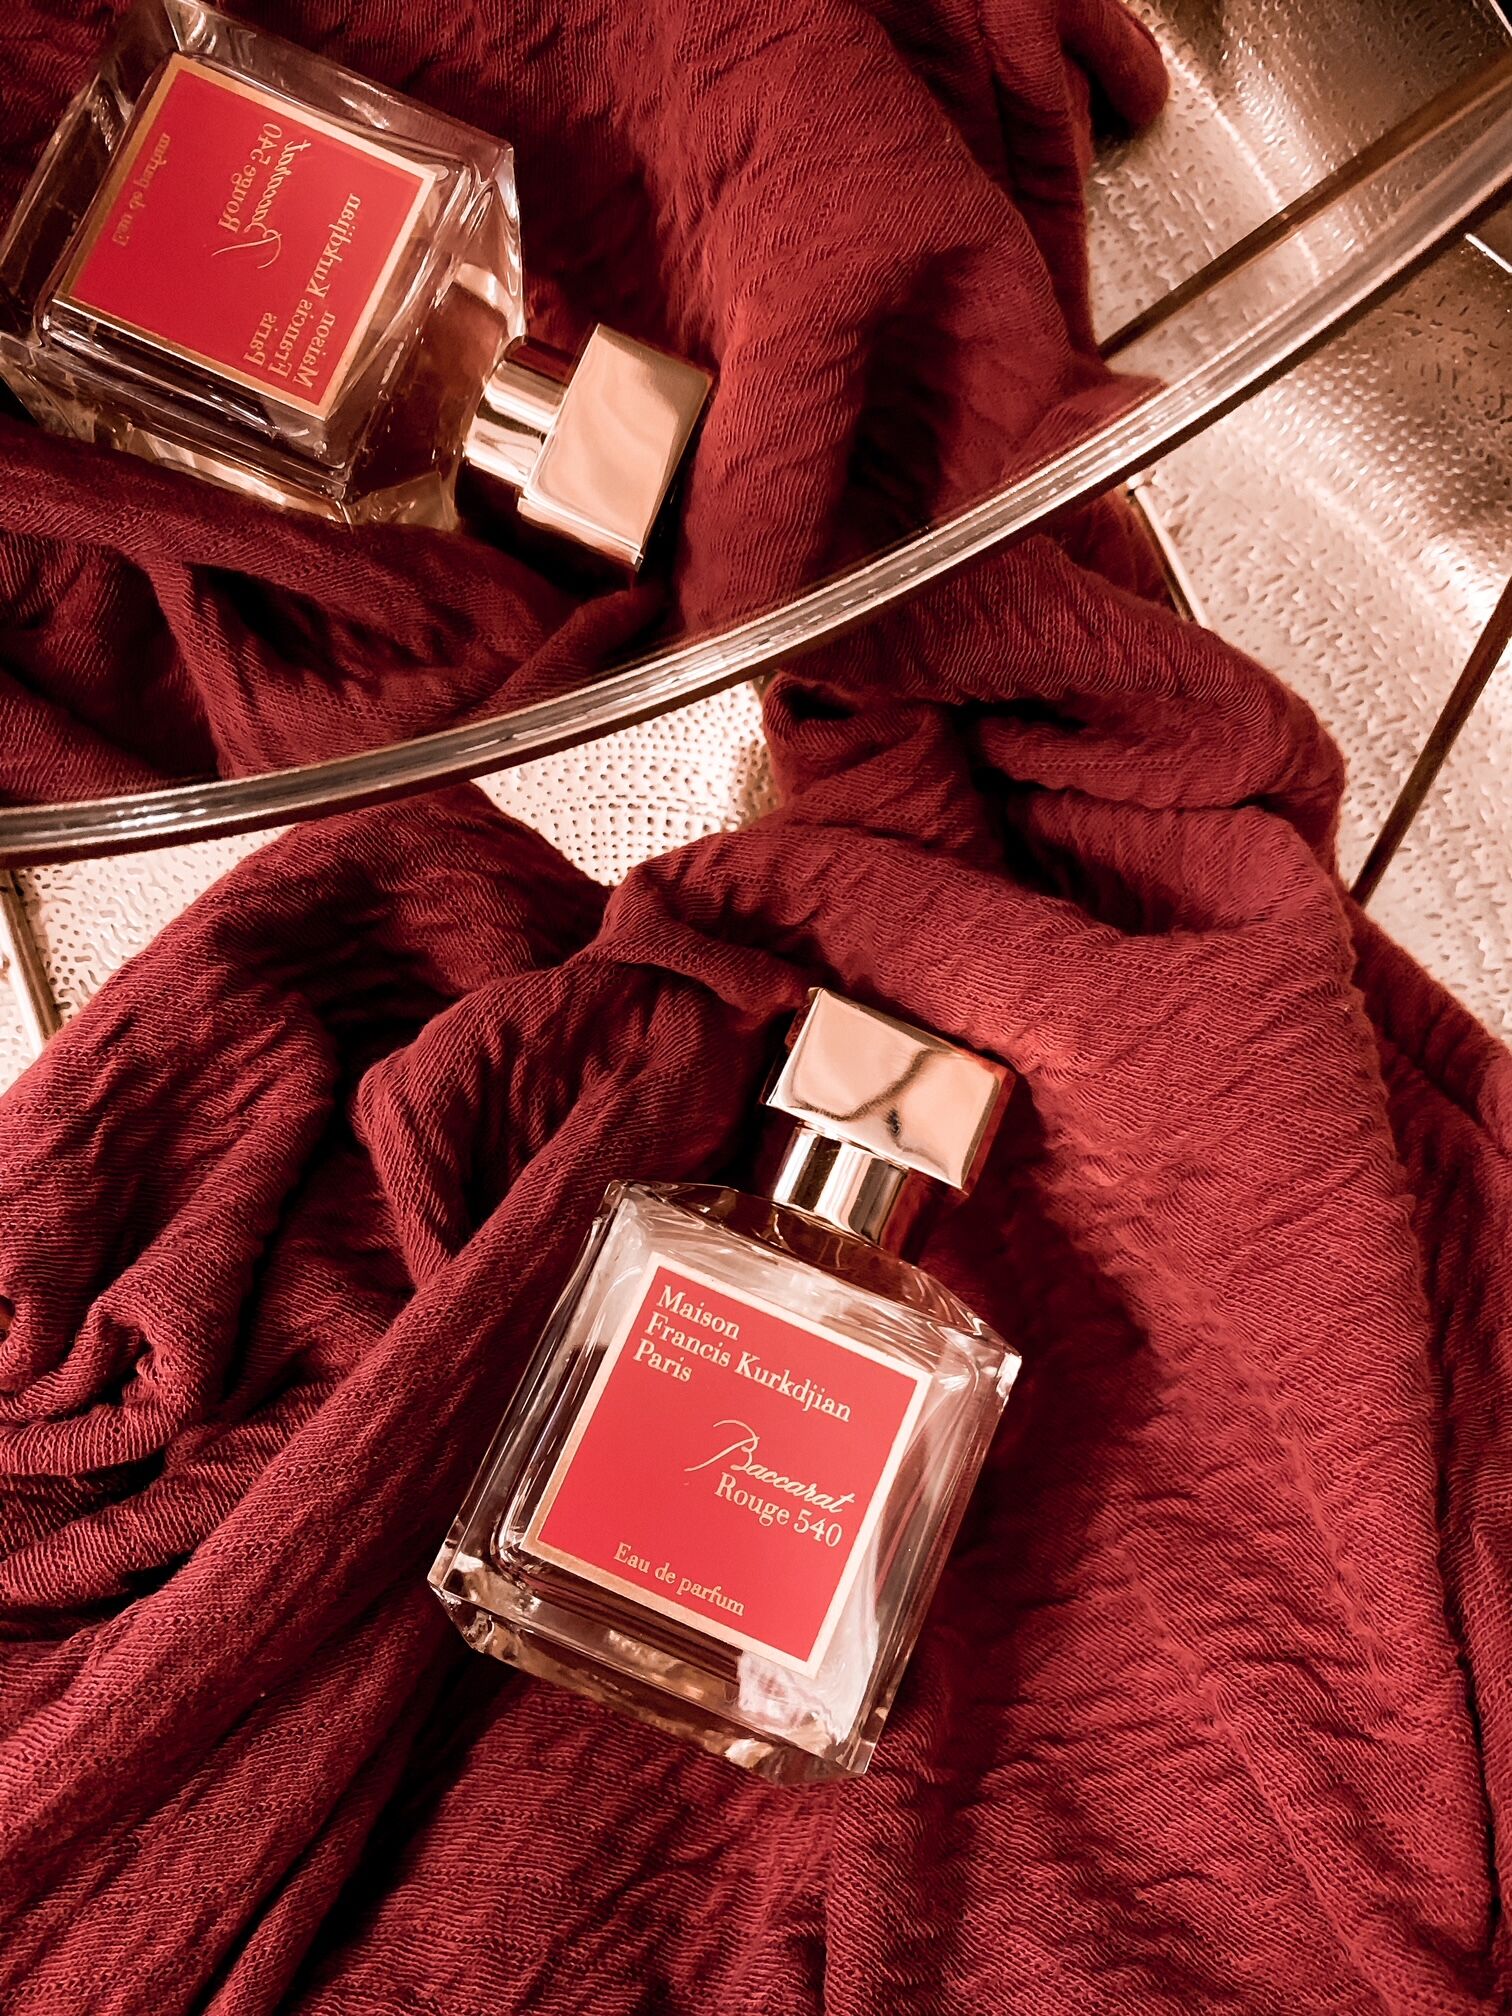 Maison Francis Kurkdijan Baccarat Rouge 540 parfüm